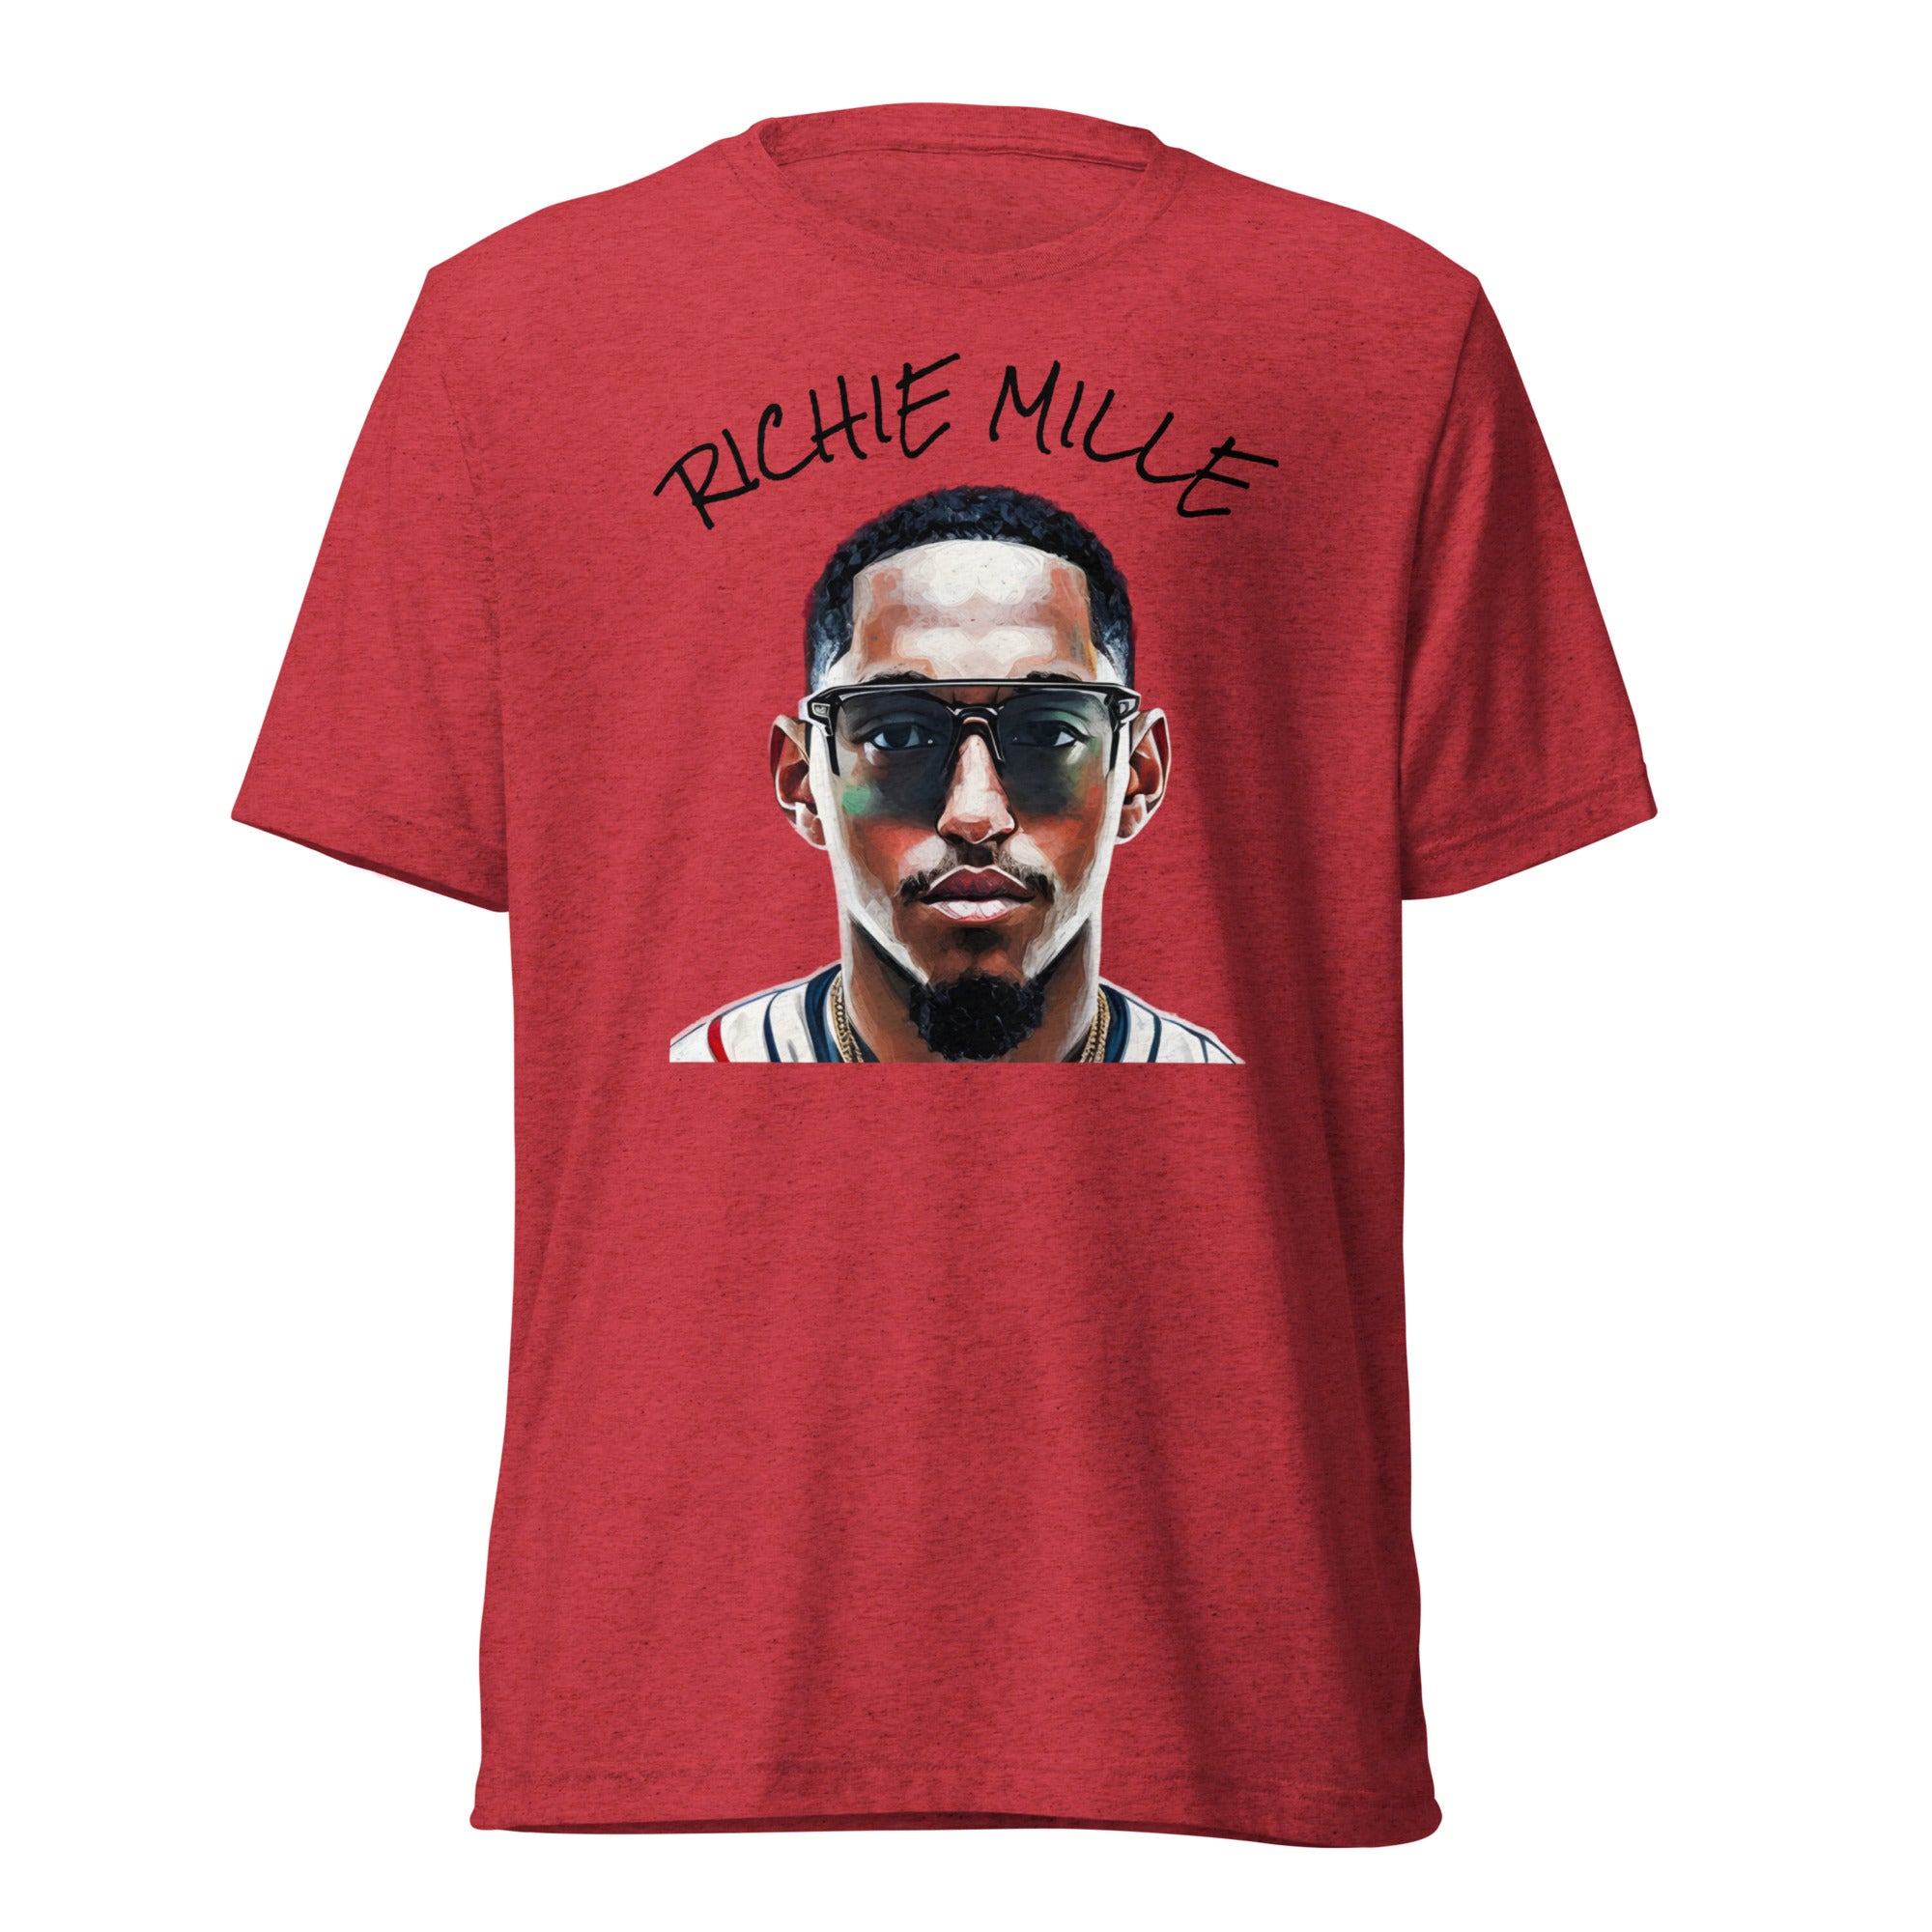 Richie Mille Shirt #2